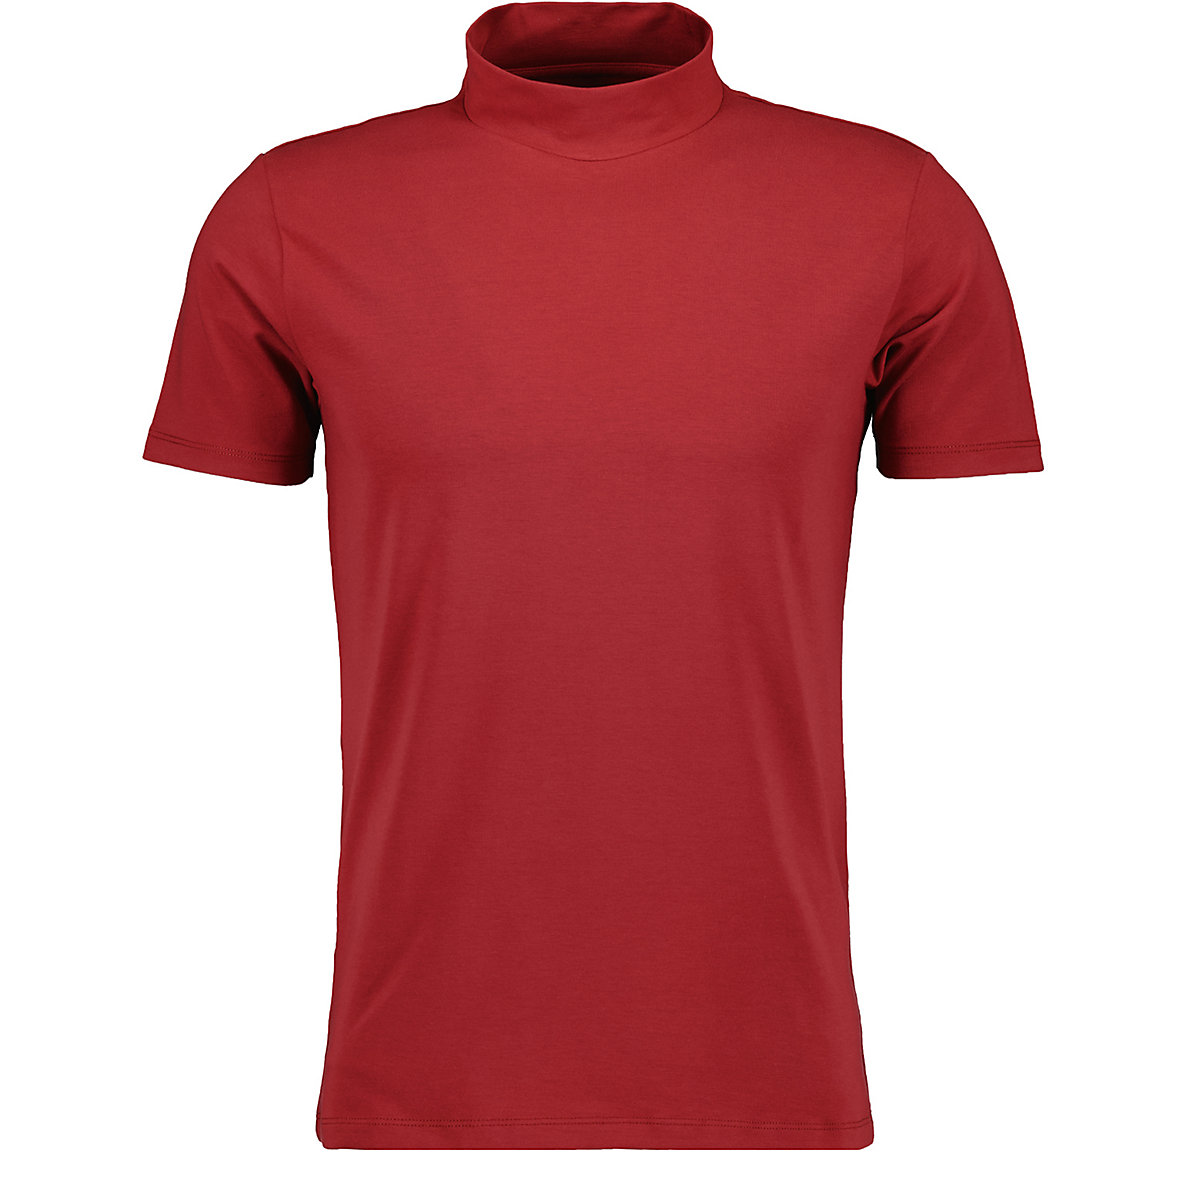 RAGMAN Stehkragen-Shirt Body fit T-Shirts weinrot